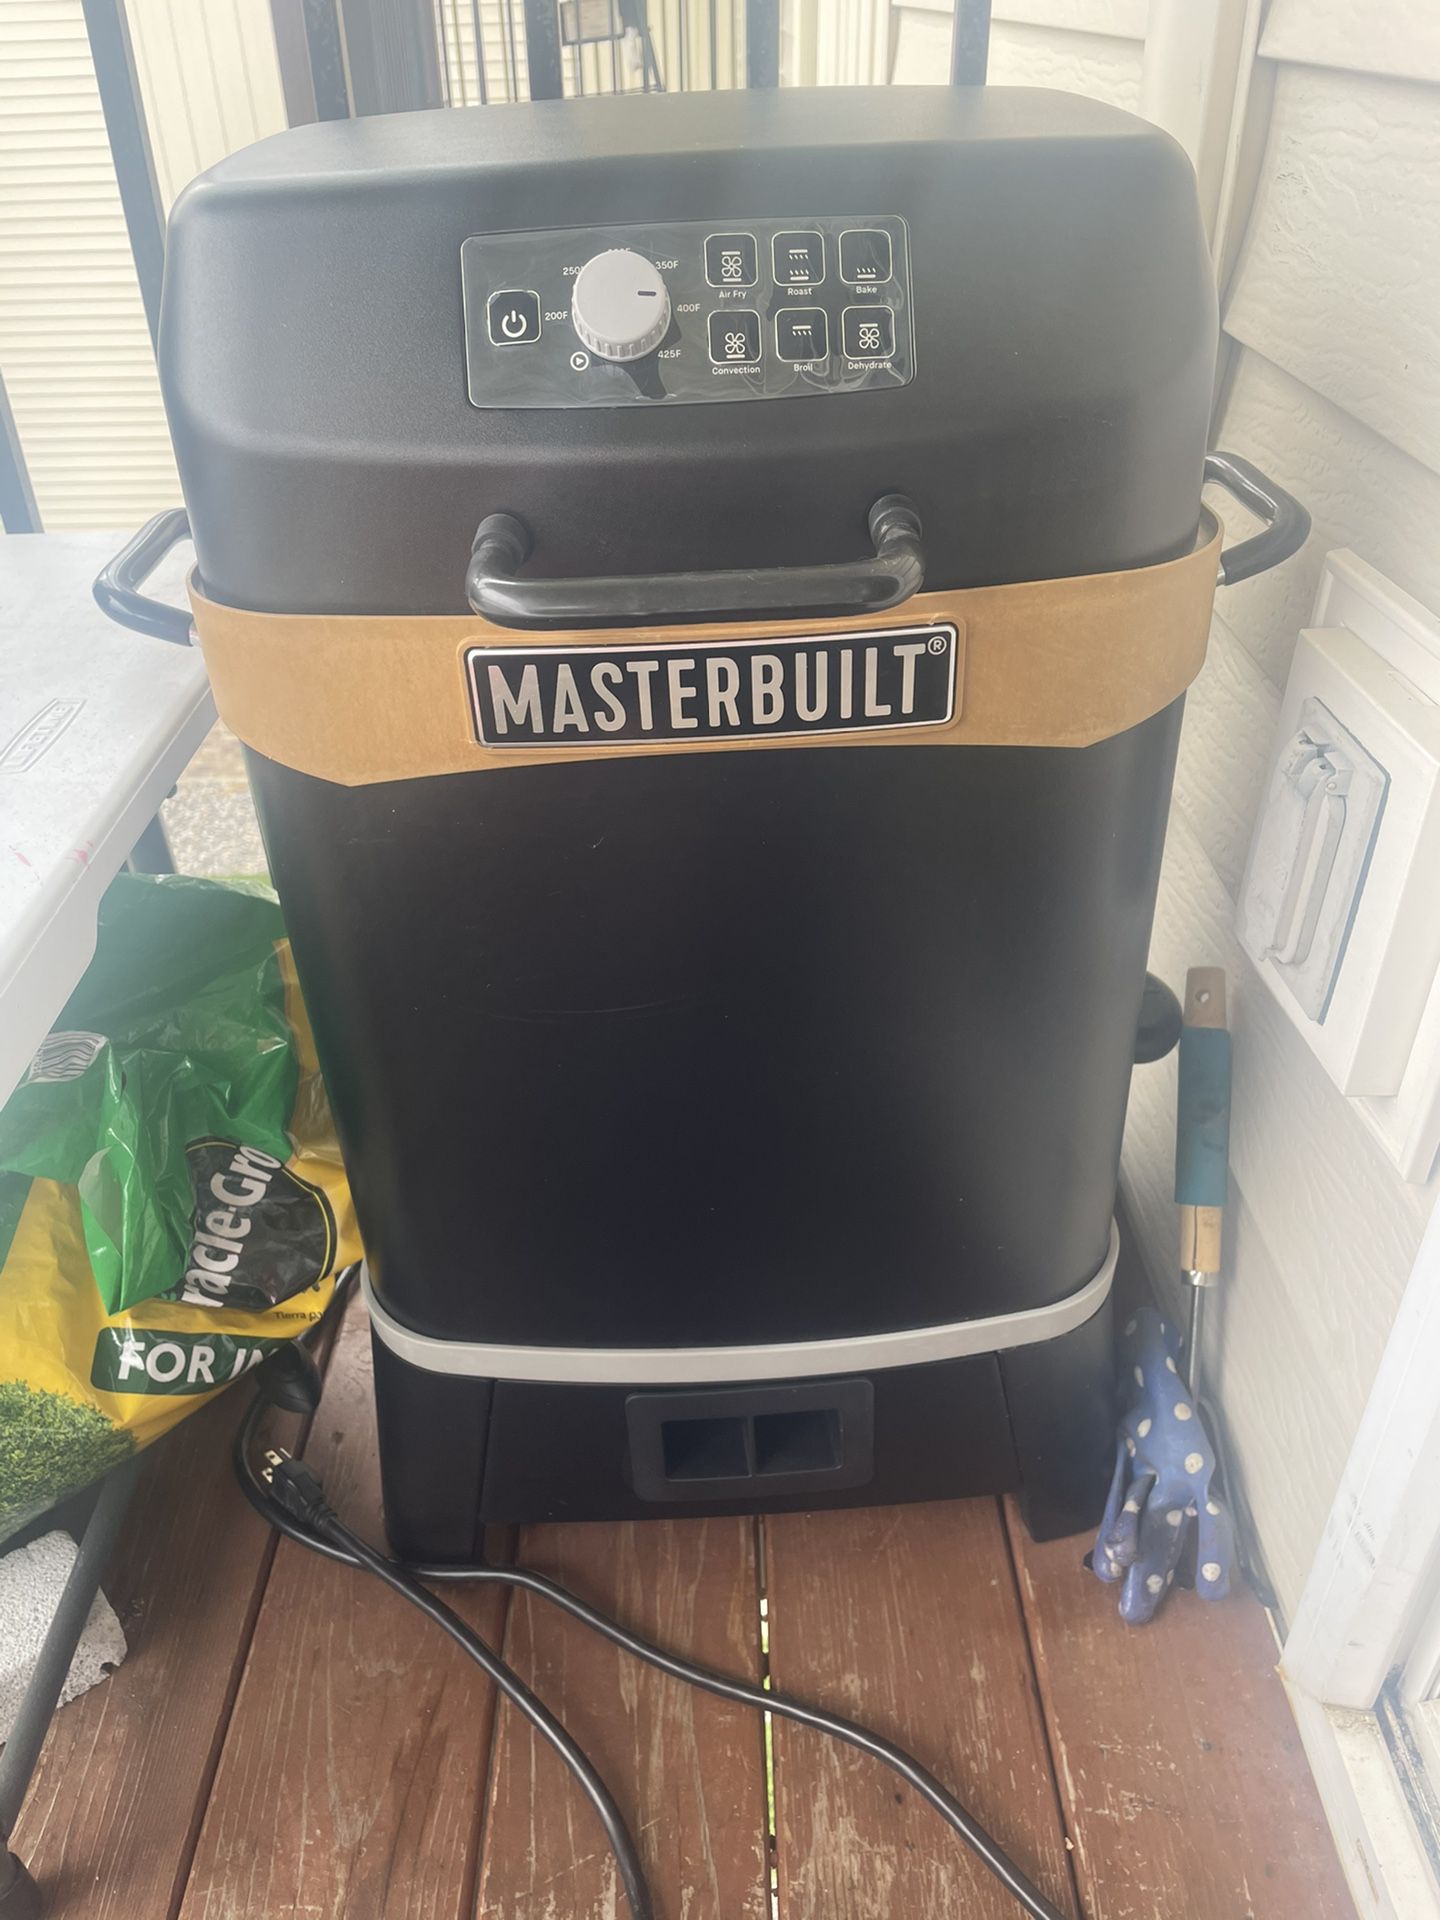 Masterbuilt 20 Quart 6-in-1 Outdoor Air Fryer - Never Used Brand New for  Sale in Belleville, NJ - OfferUp